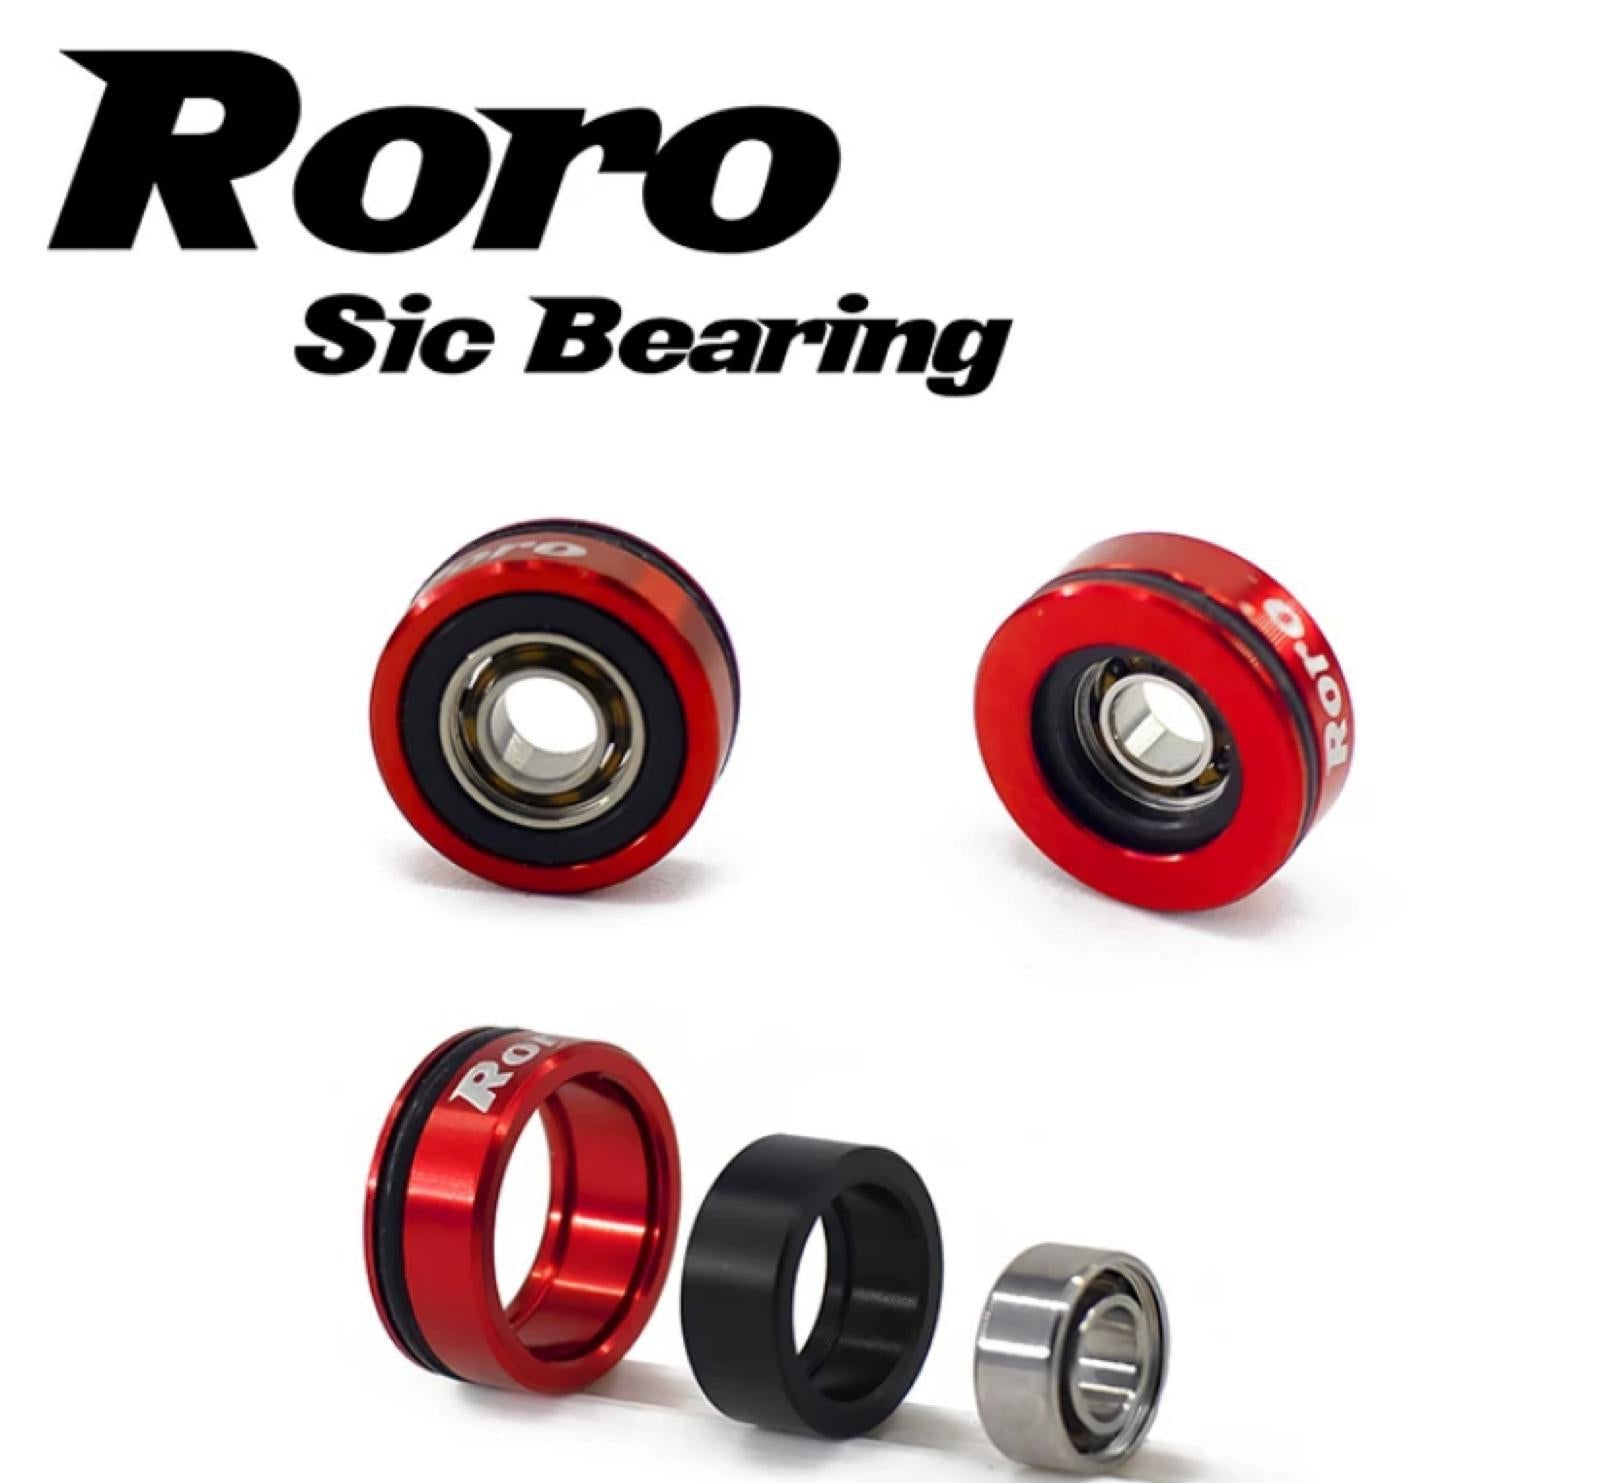 Roro Ceramic Ball Spool Bearings for Baitcasting Reel